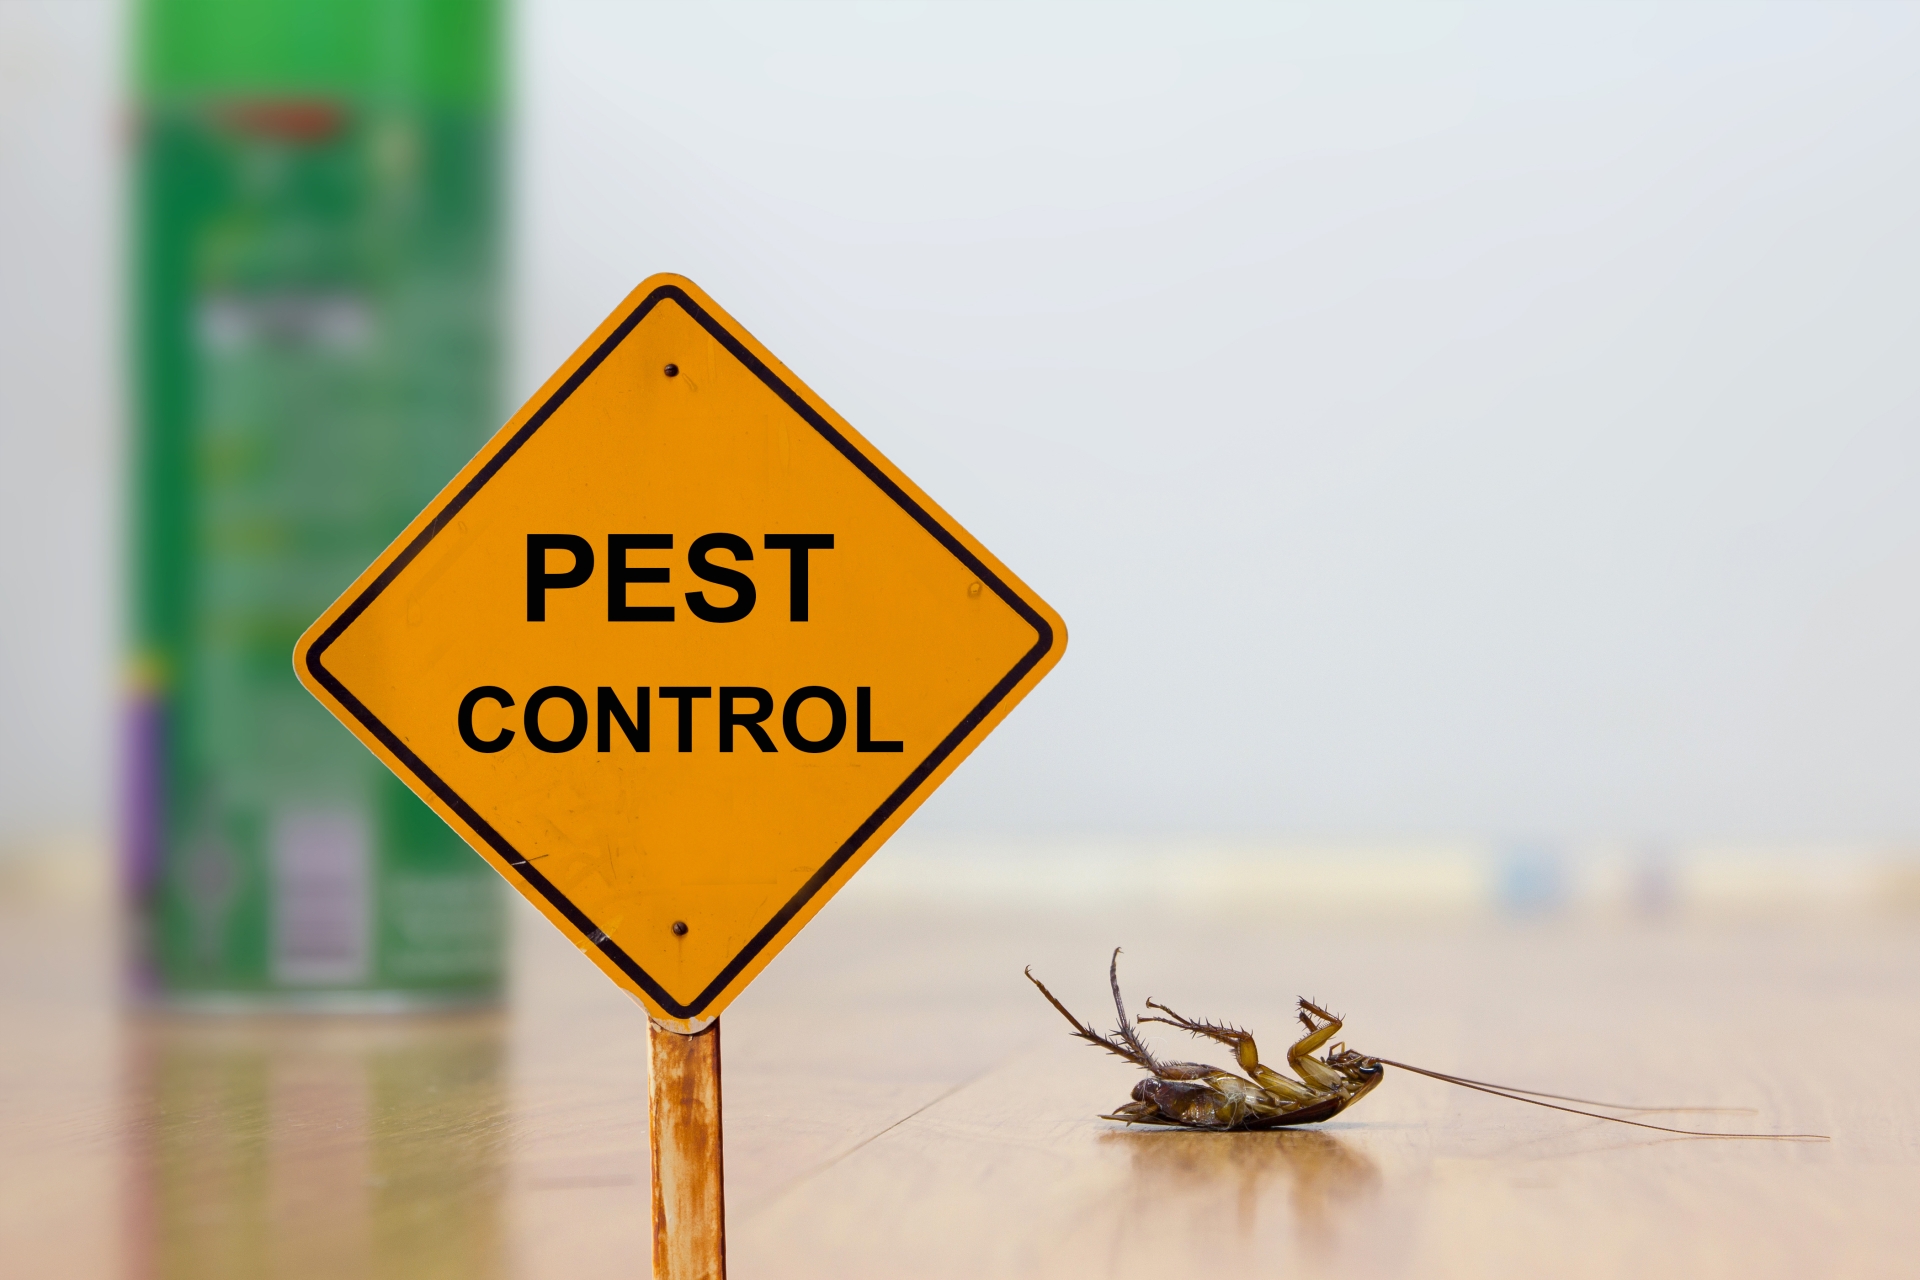 24 Hour Pest Control, Pest Control in Soho, W1. Call Now 020 8166 9746